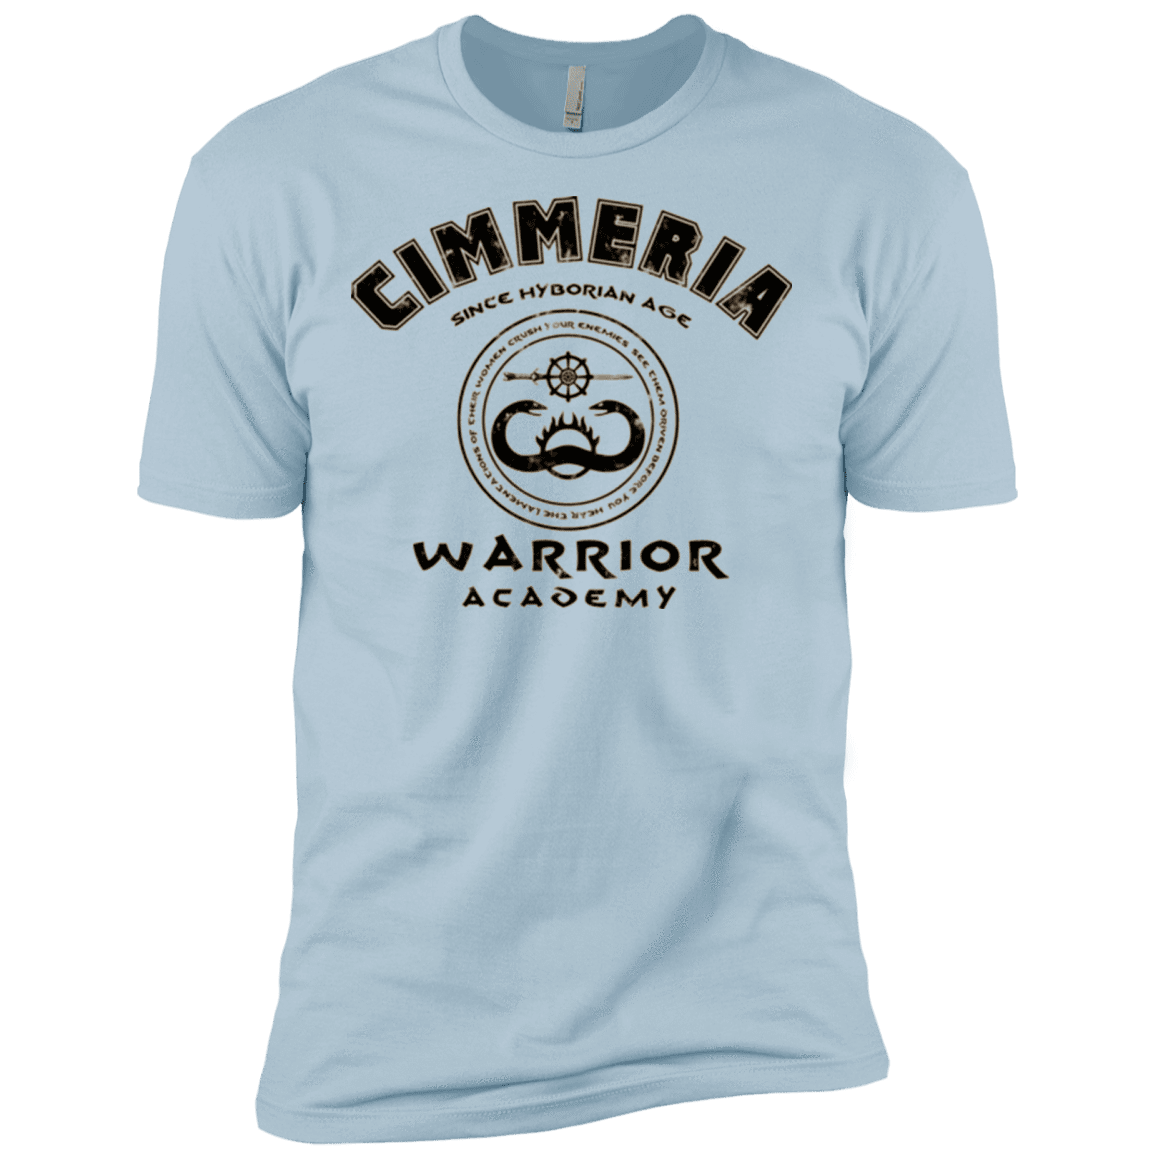 T-Shirts Light Blue / X-Small Crimmeria Warrior academy Men's Premium T-Shirt